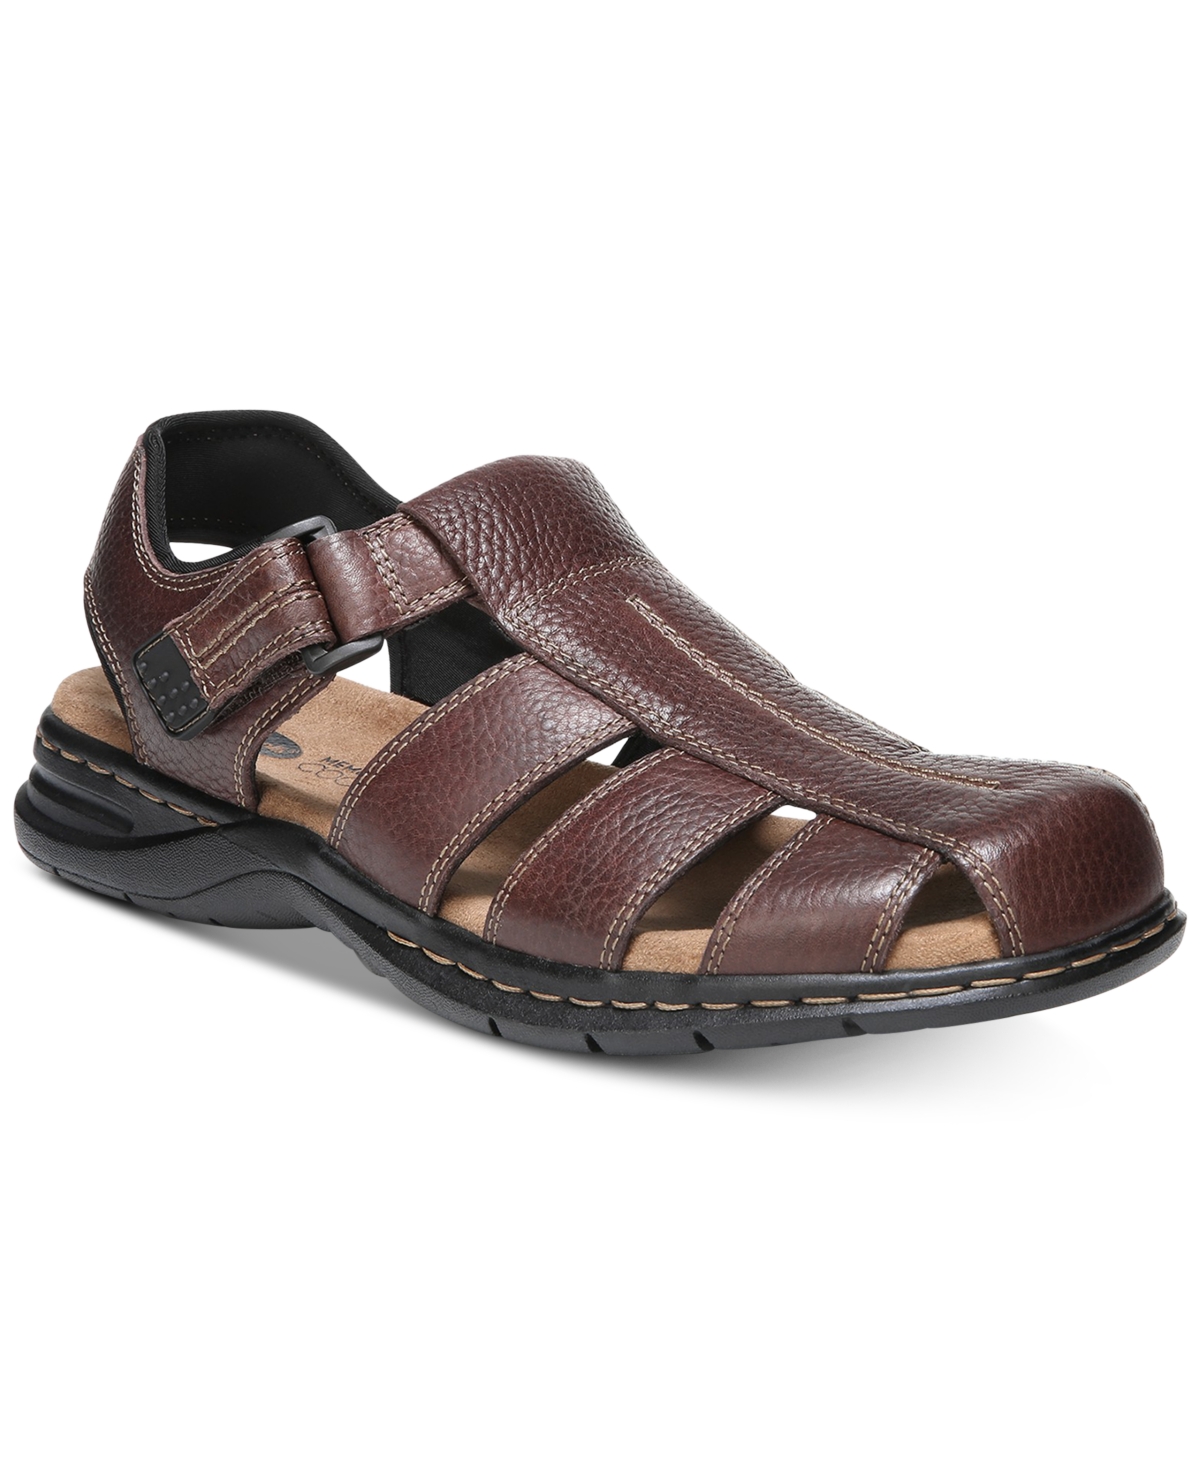 Men's Gaston Leather Sandals - Briar